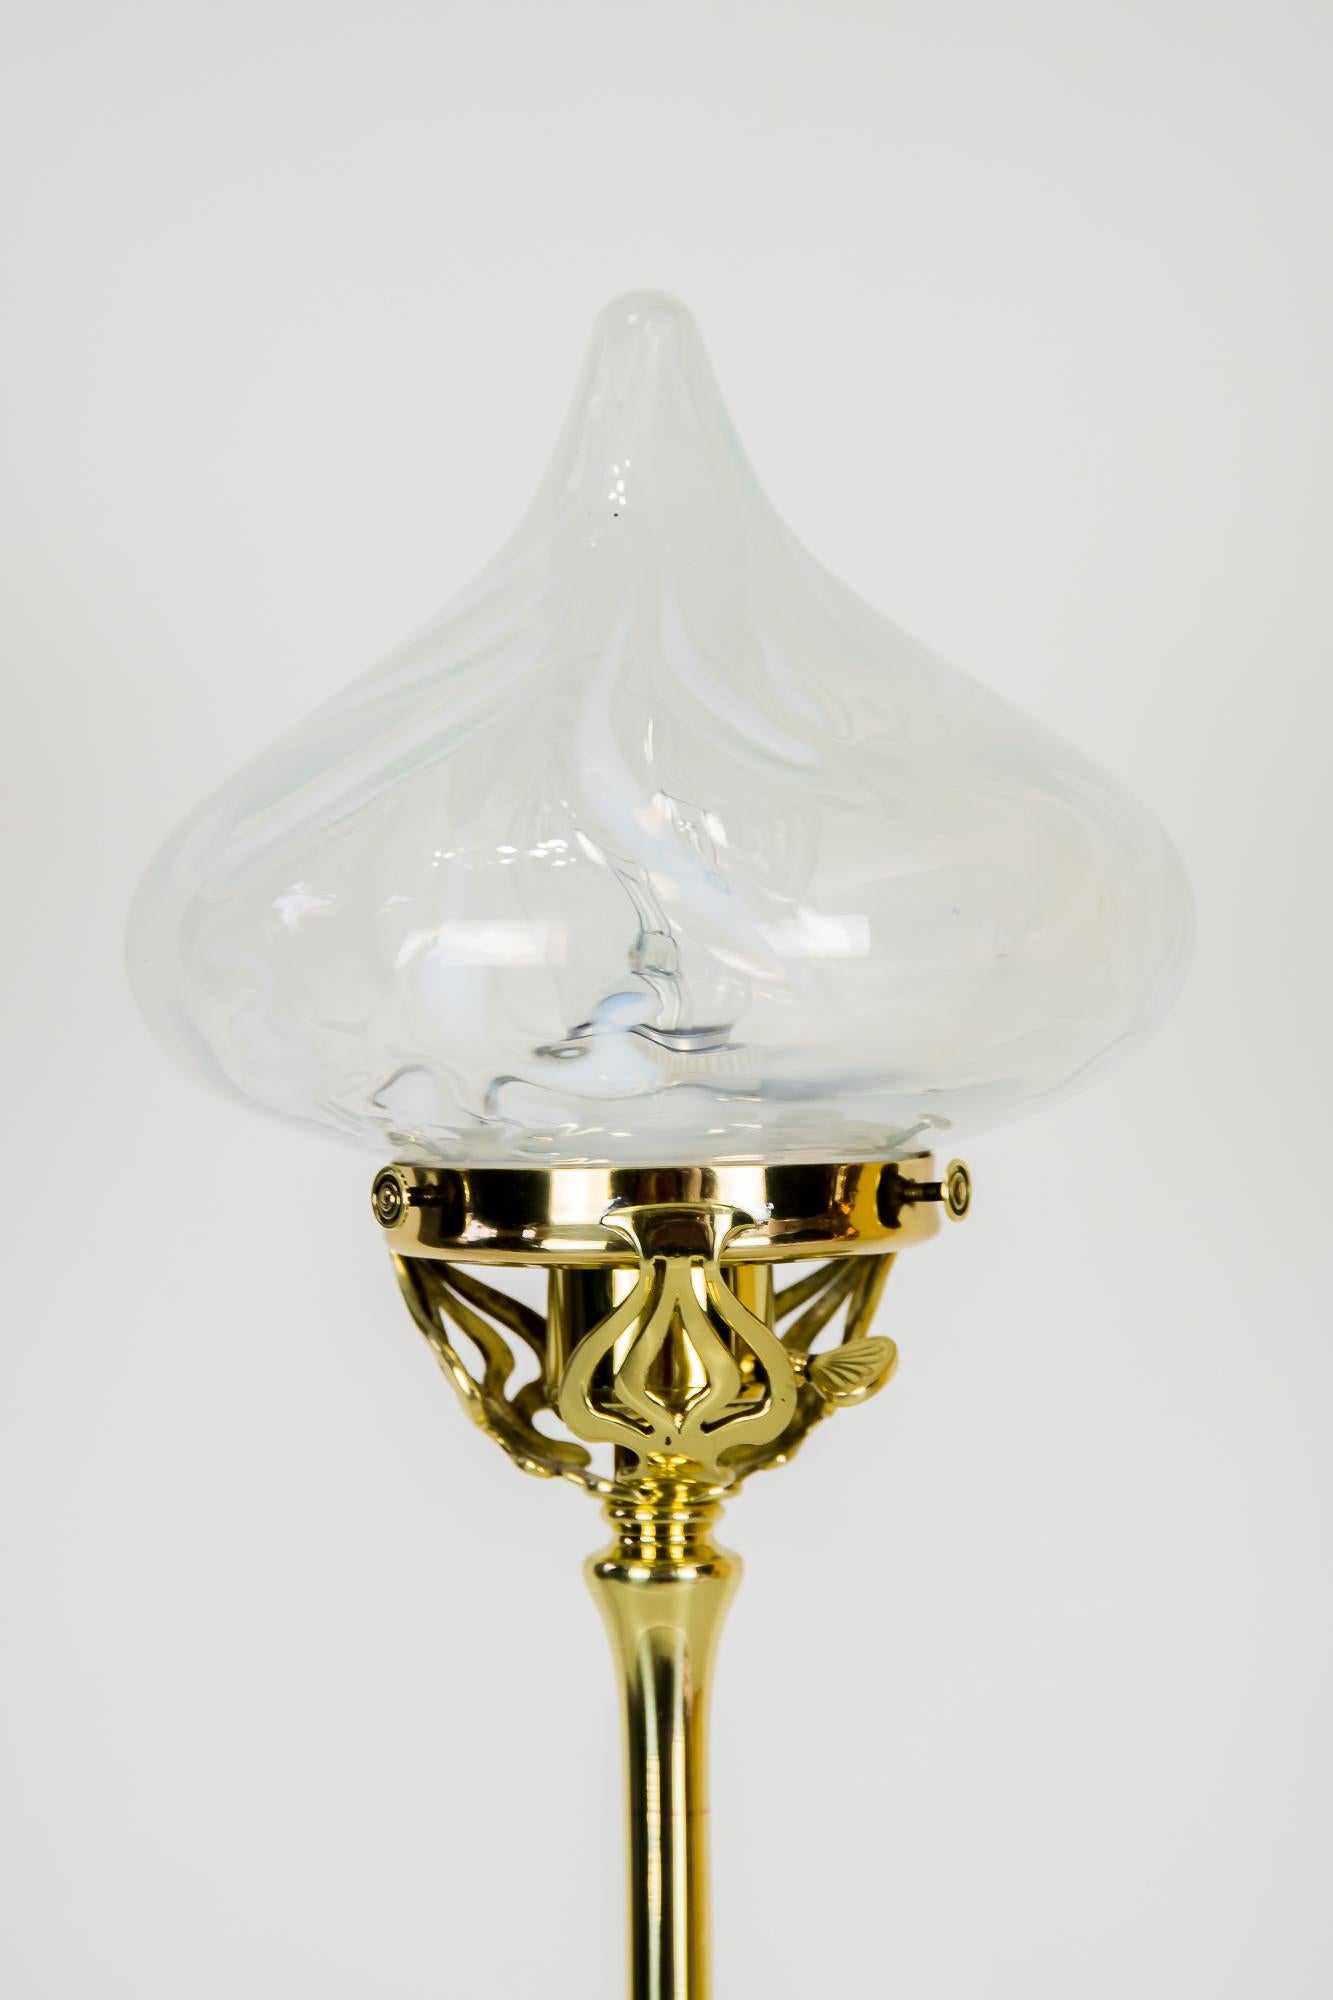 Austrian Jugendstil Floral Lamp Vienna 1905s with Opaline Glass Shade For Sale